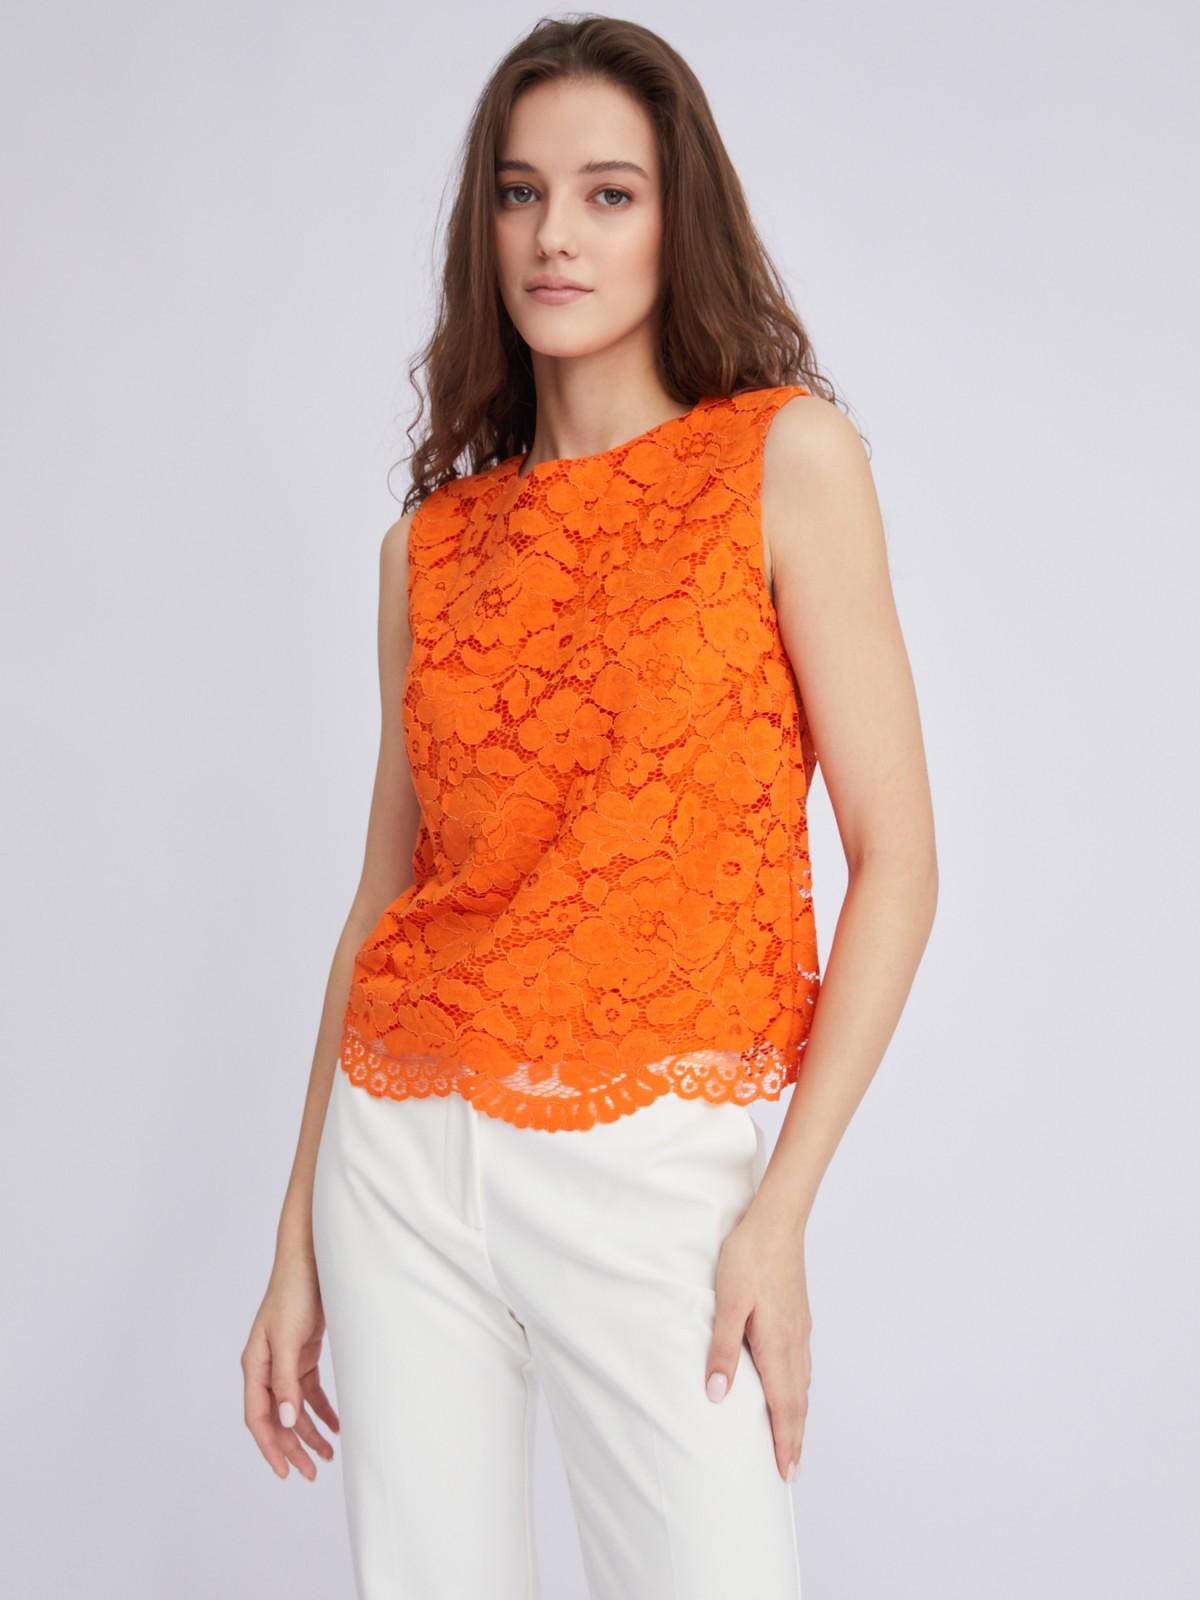 Кружевной топ-блузка без рукавов zolla 02324132L053, цвет оранжевый, размер XS - фото 5